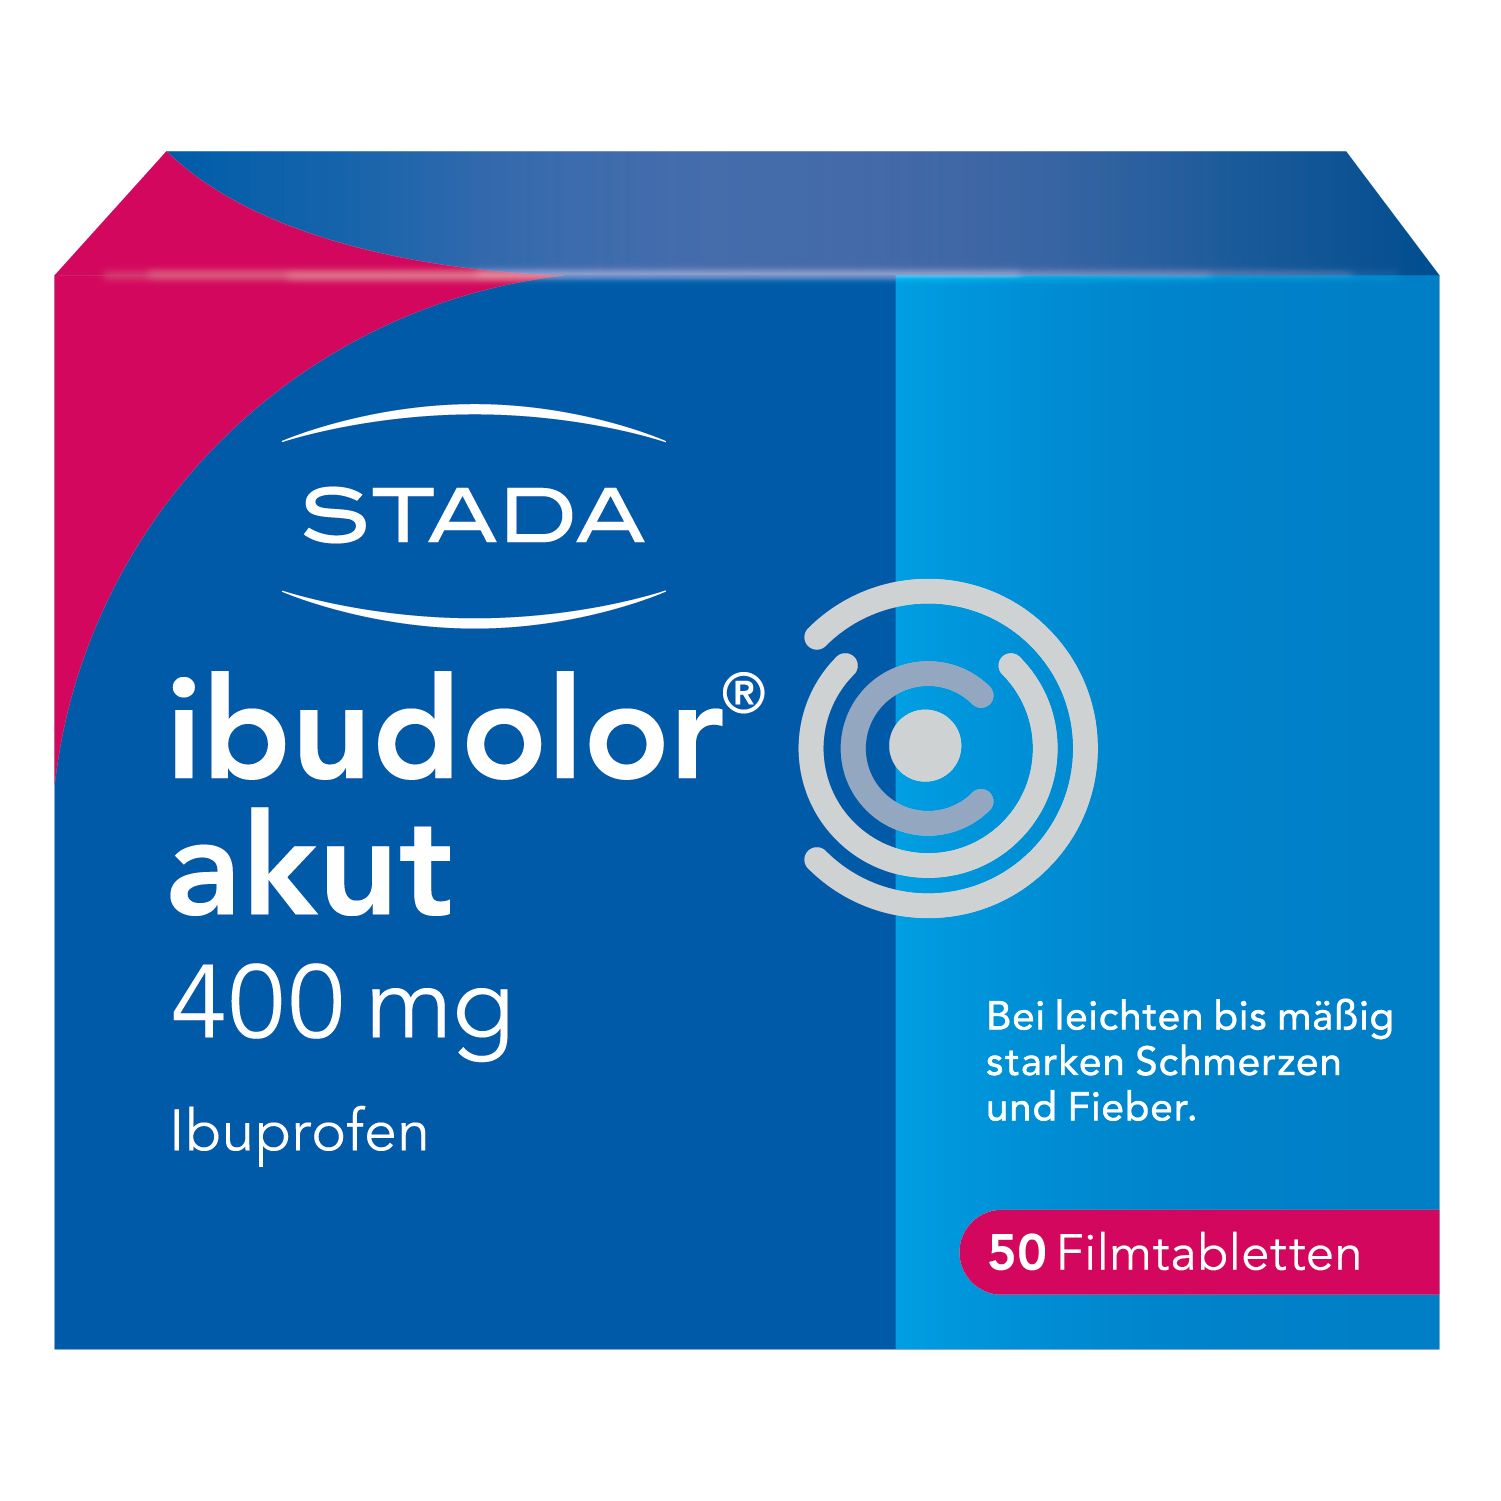 ibudolor® akut 400 mg Ibuprofen